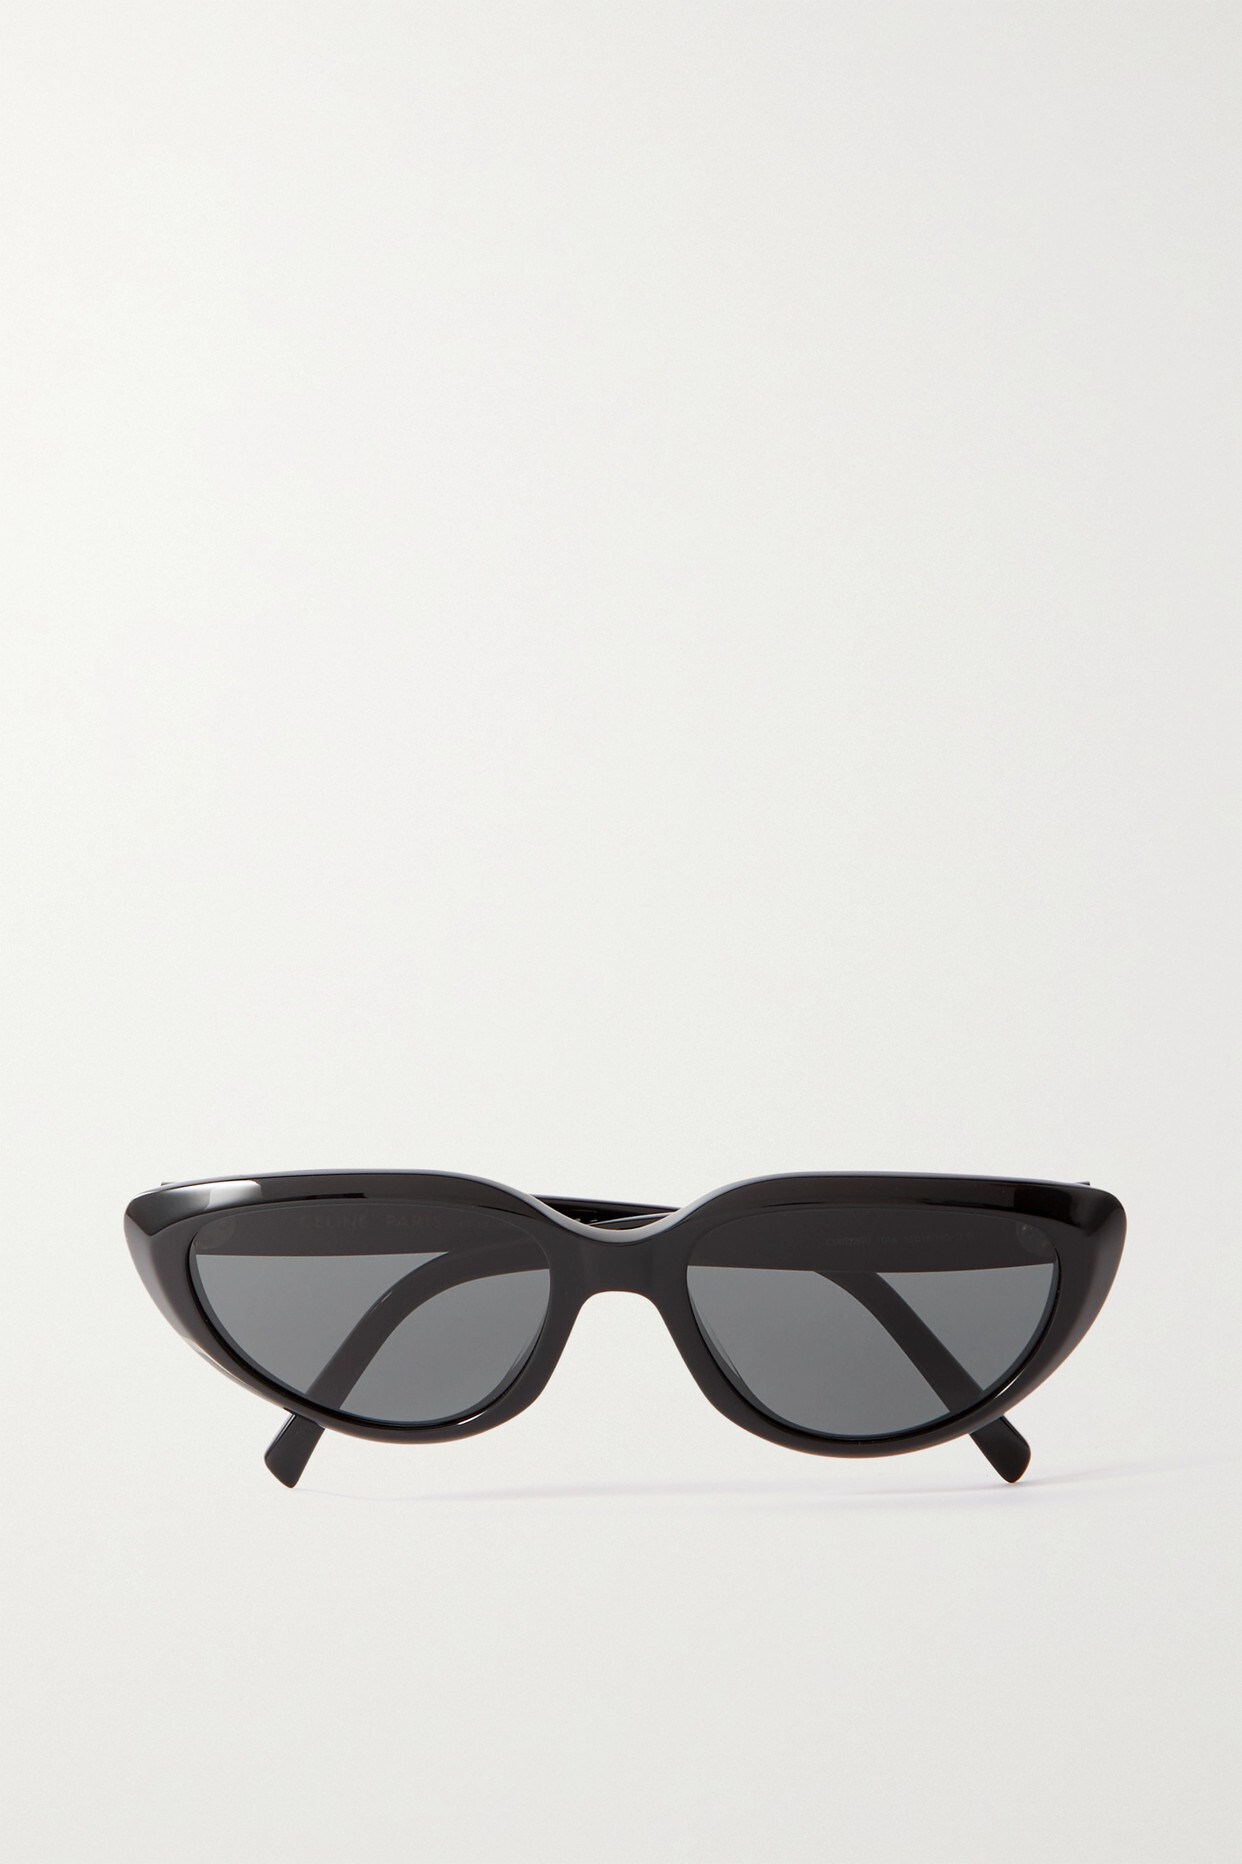 CELINE Eyewear - Cat-eye Acetate Sunglasses - Black